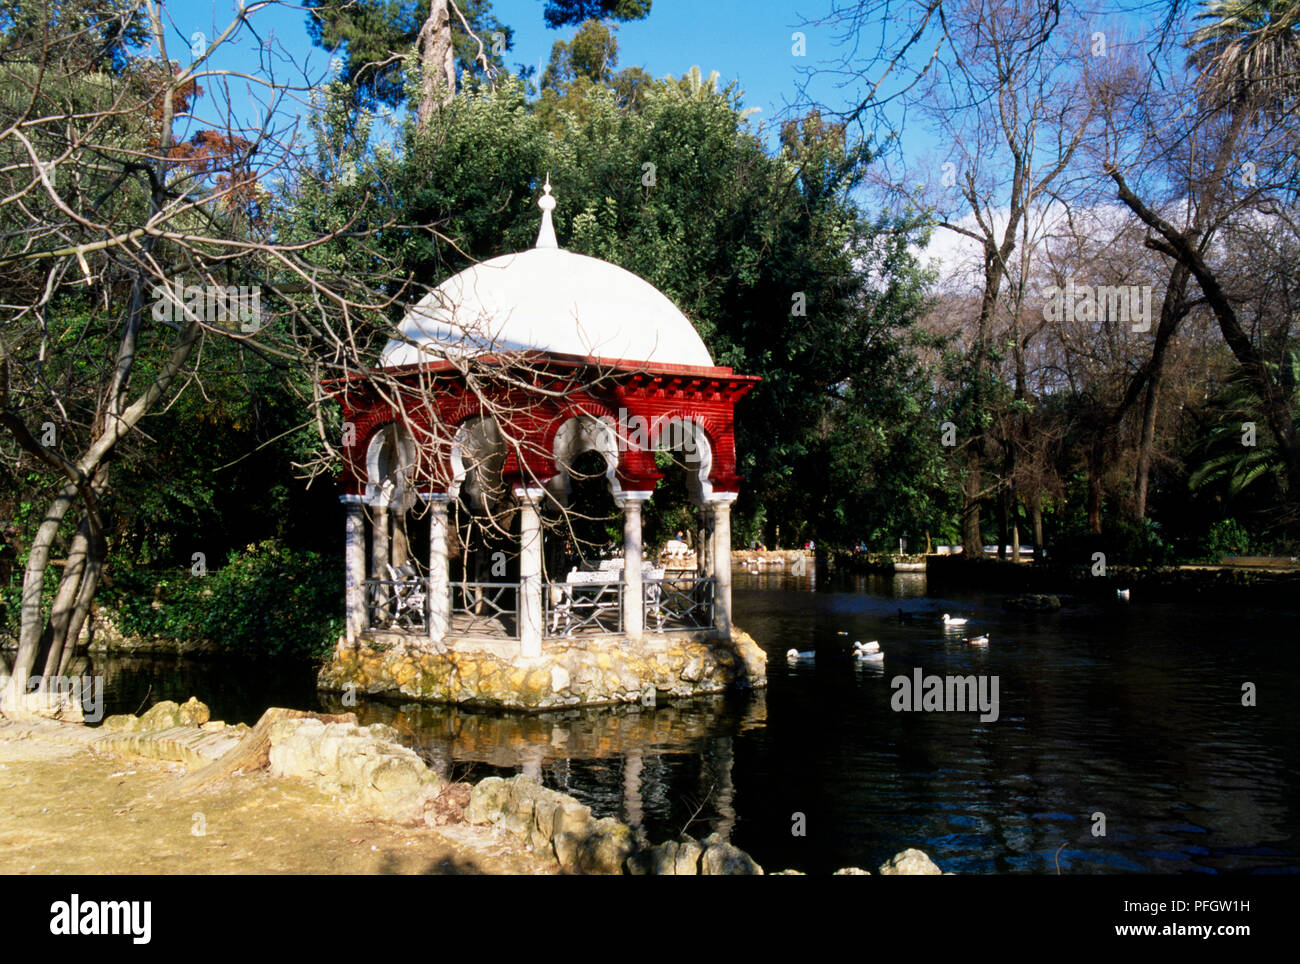 Spain, Seville, Parque Maria Luisa, Isleta de los Patos, ornamental domed gazebo on lake in the park Stock Photo